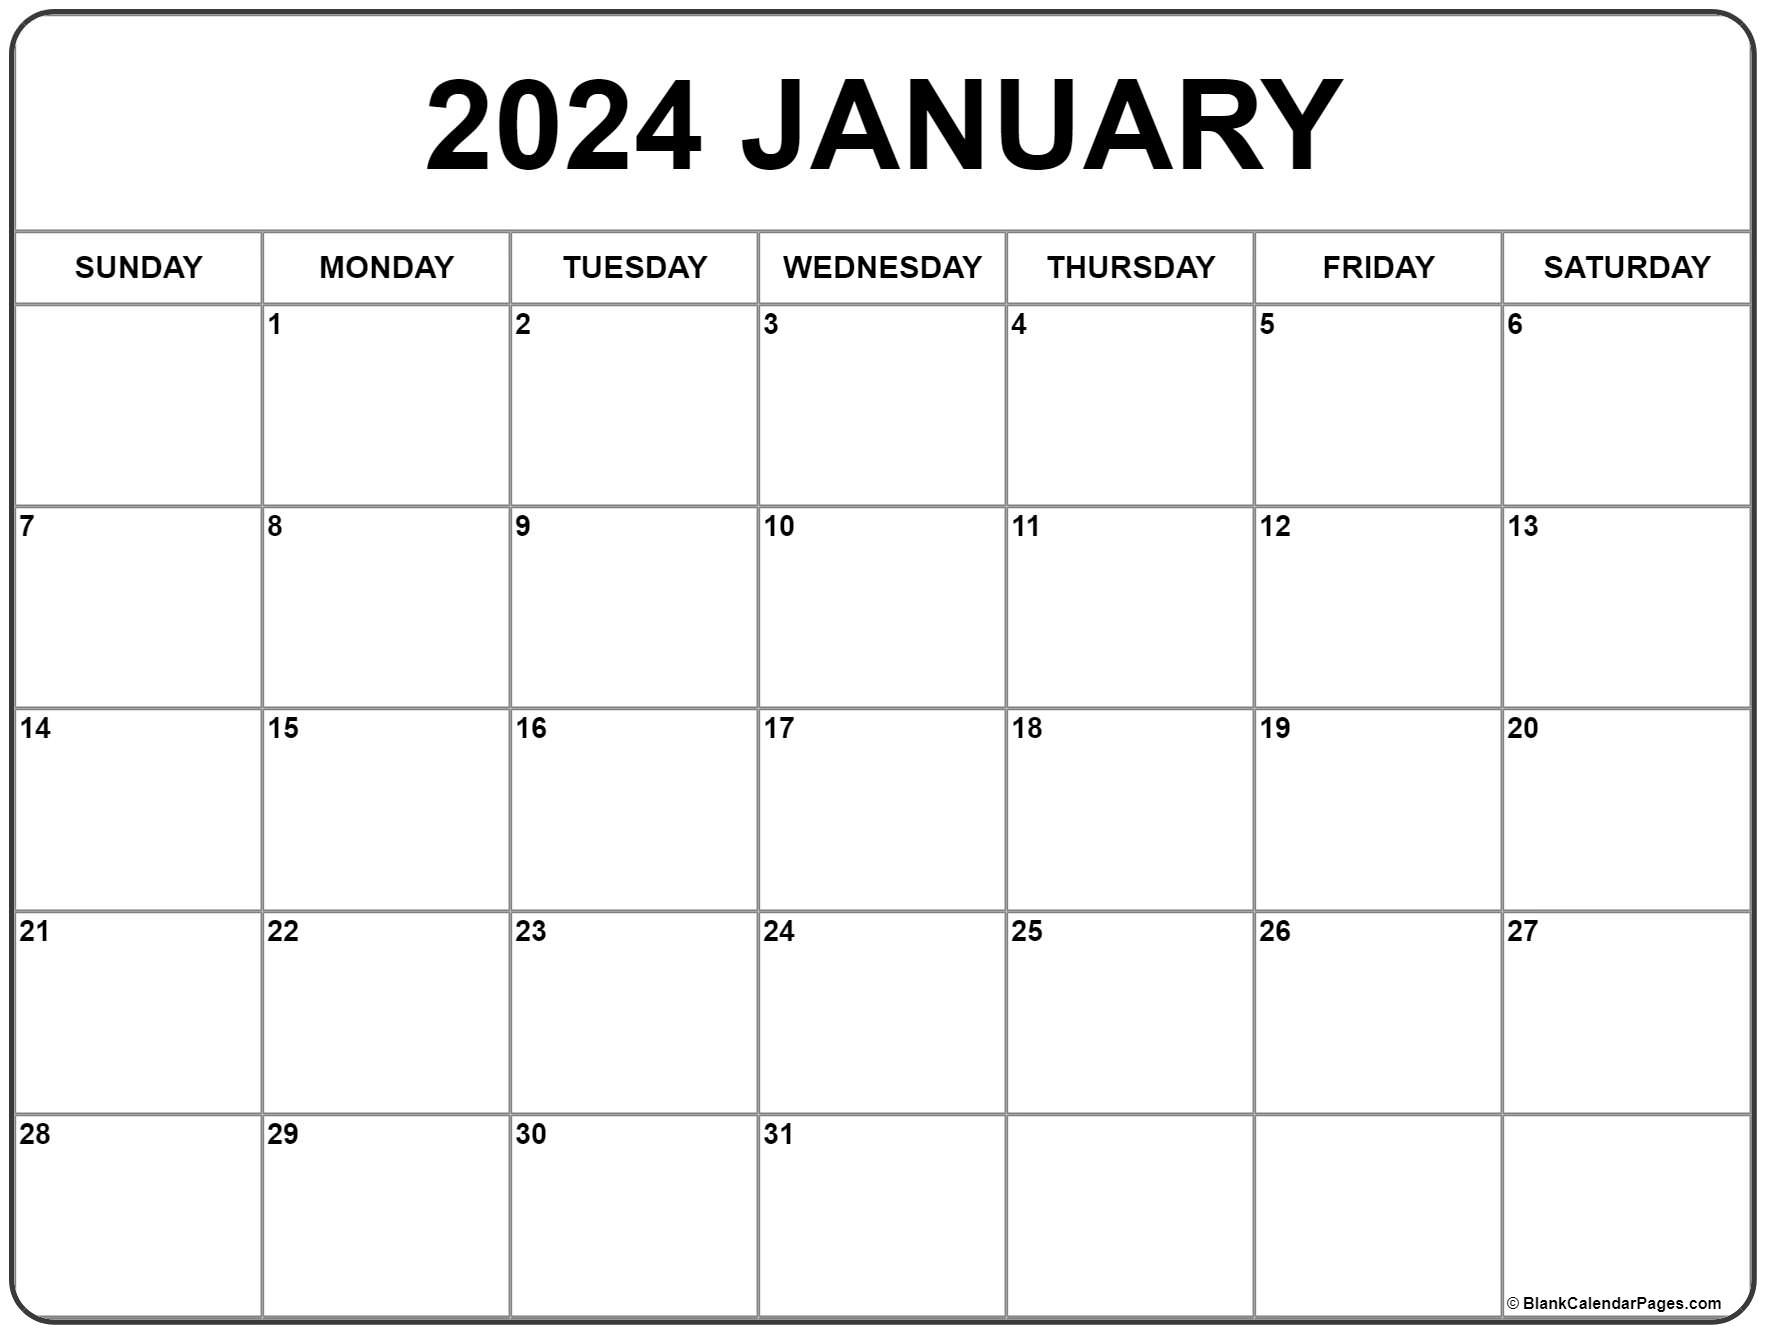 January 2024 Calendar | Free Printable Calendar for January 2024 Free Calendar Printable